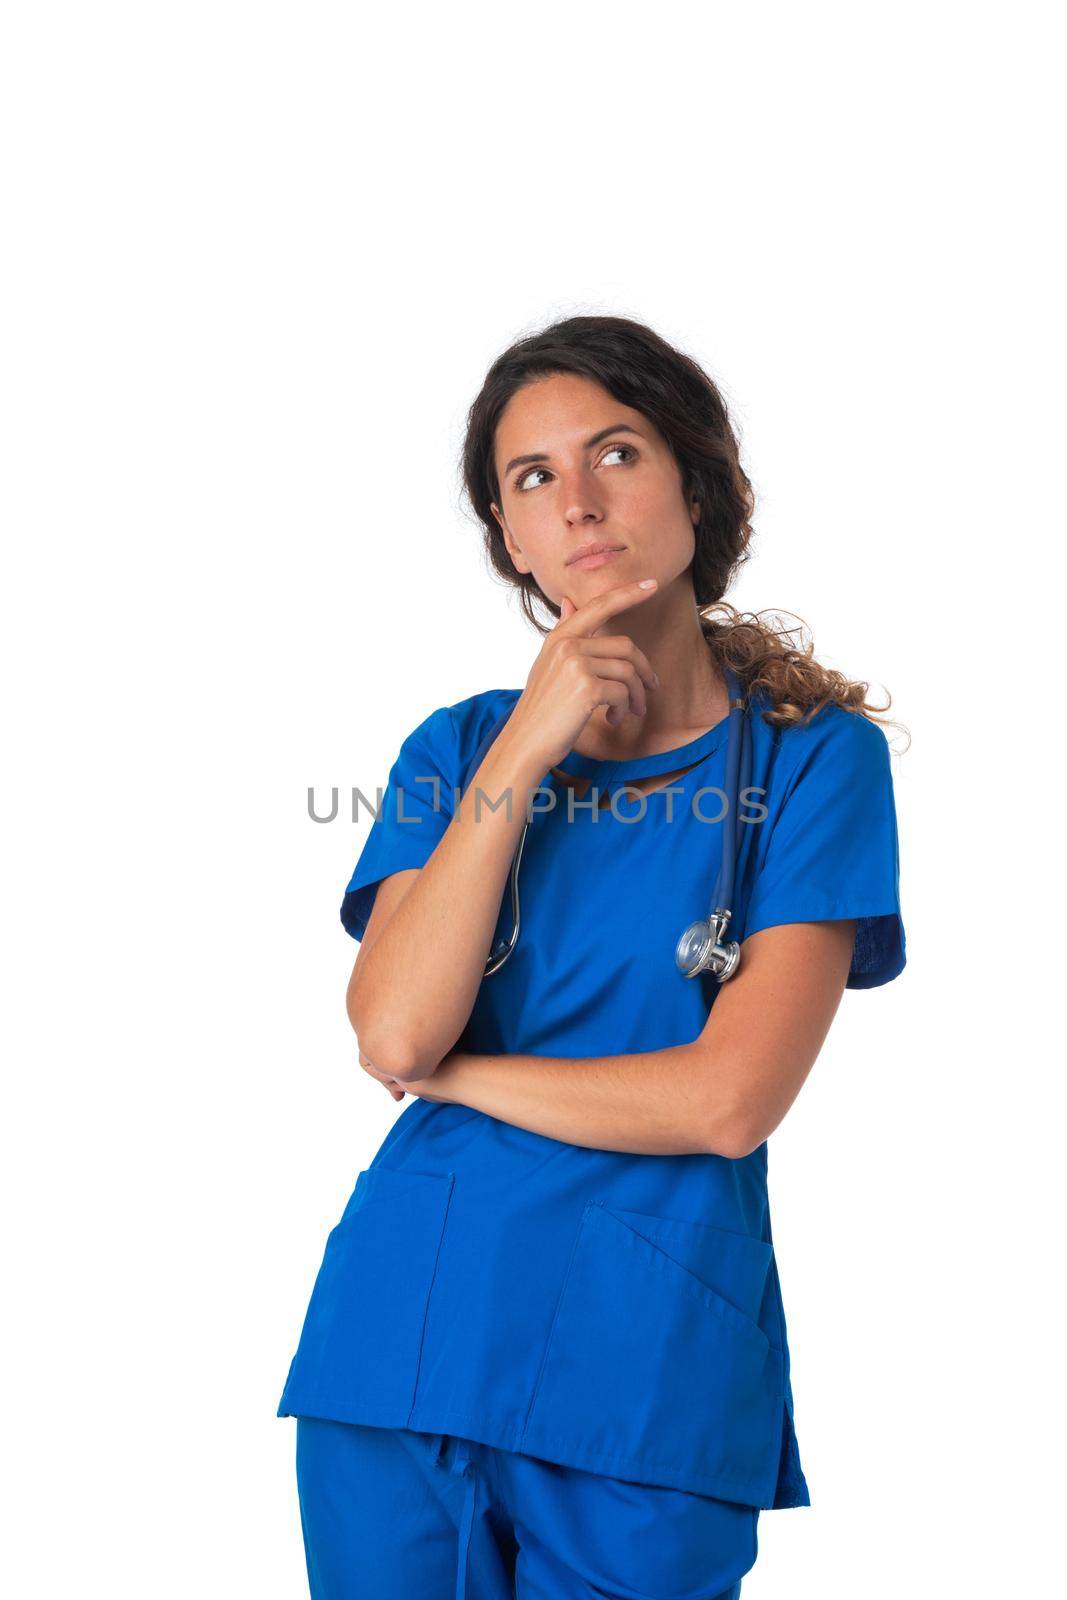 Nurse woman think looking up by ALotOfPeople